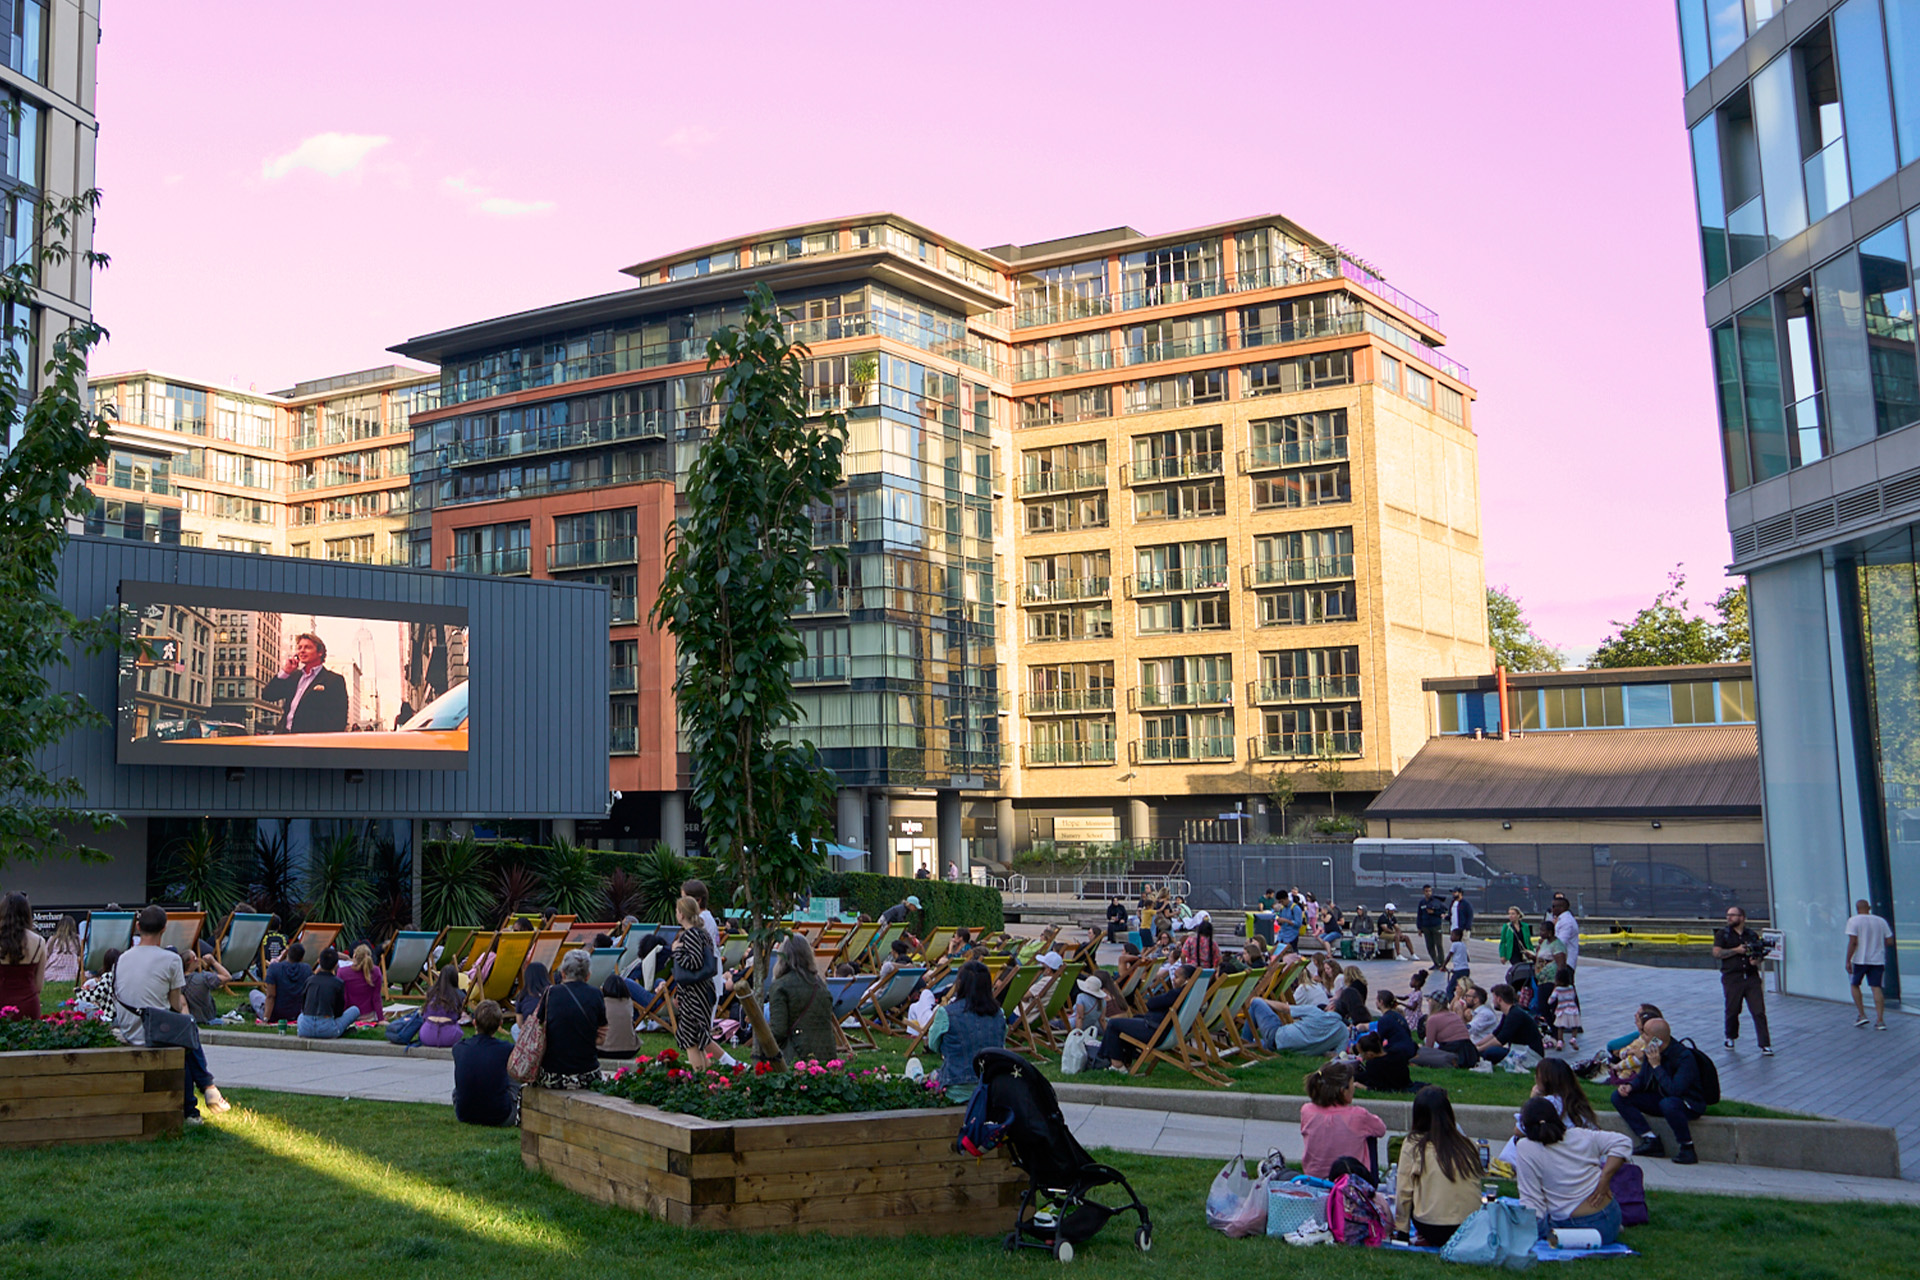 Free outdoor cinema screening